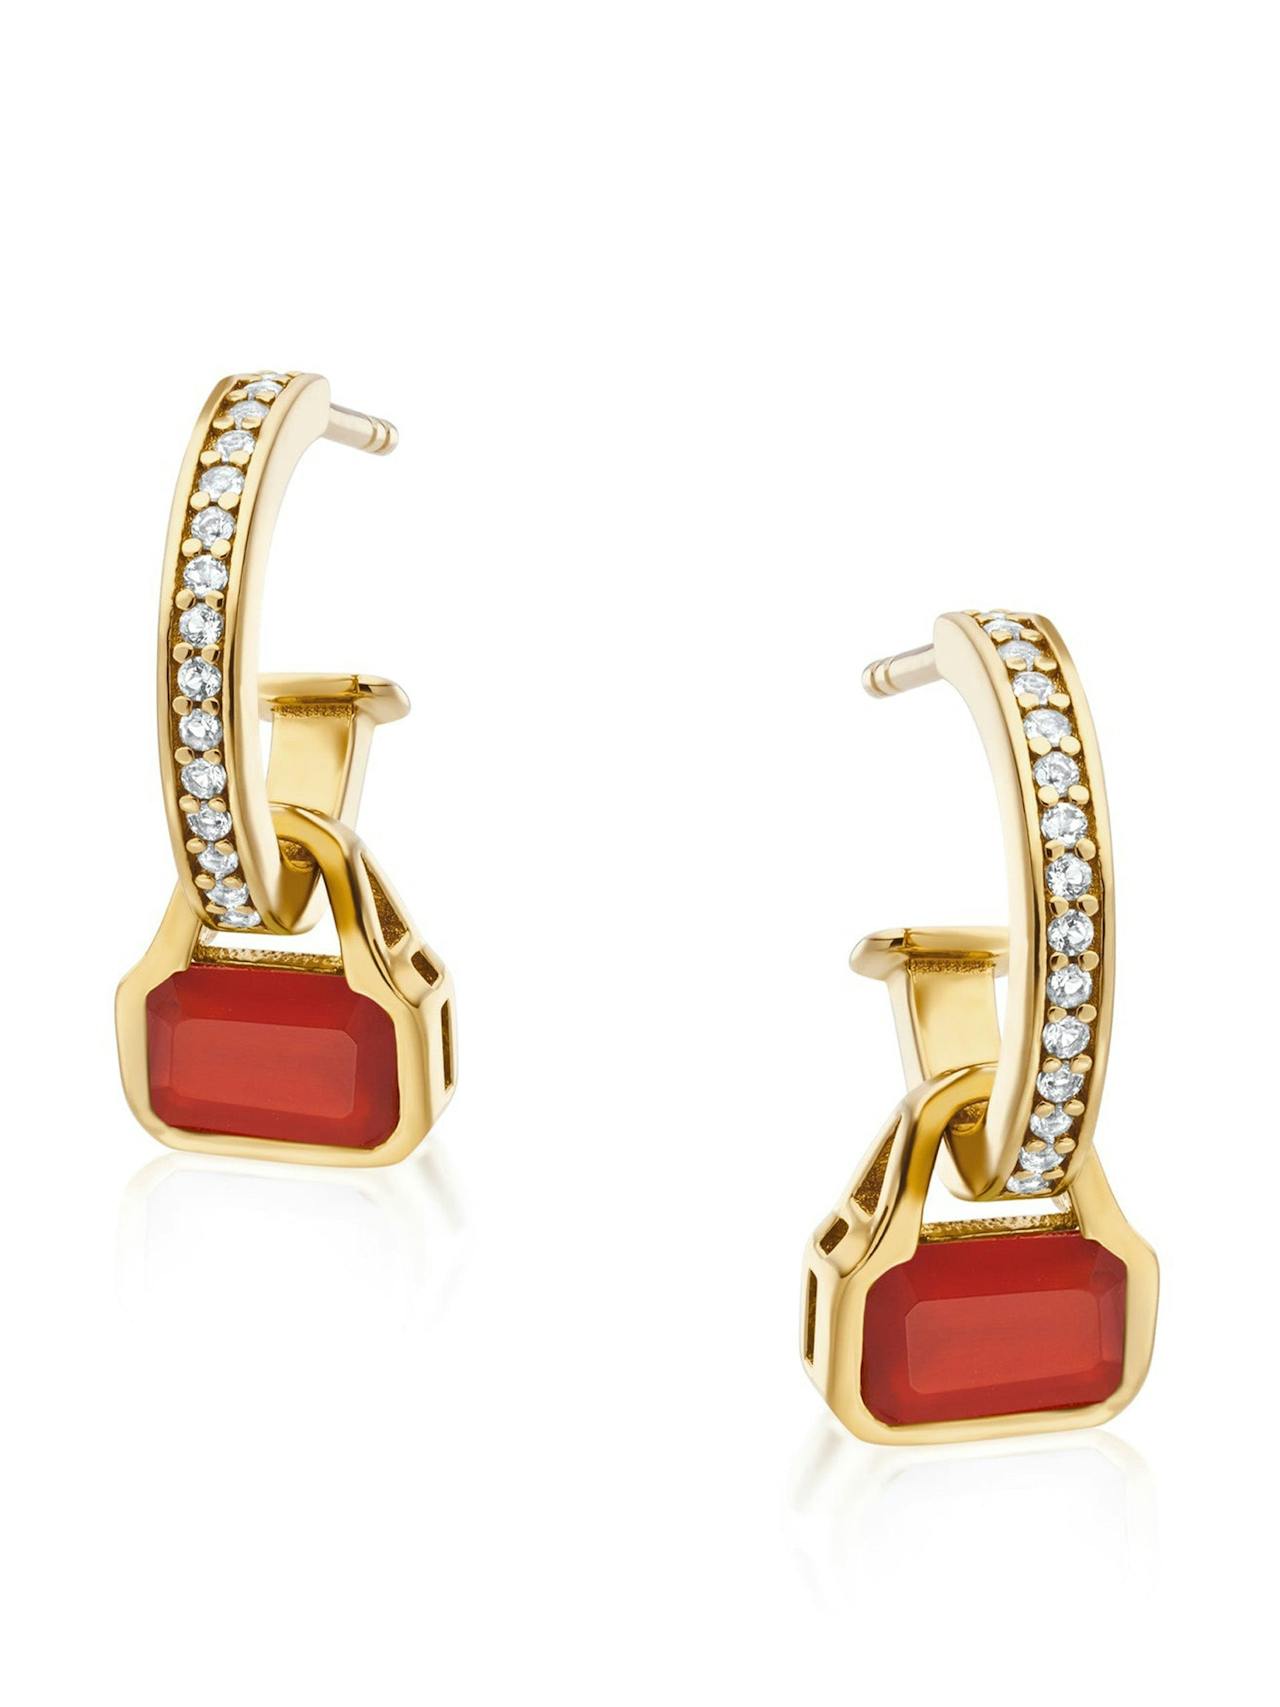 Red Agate charms on white topaz hoop earrings